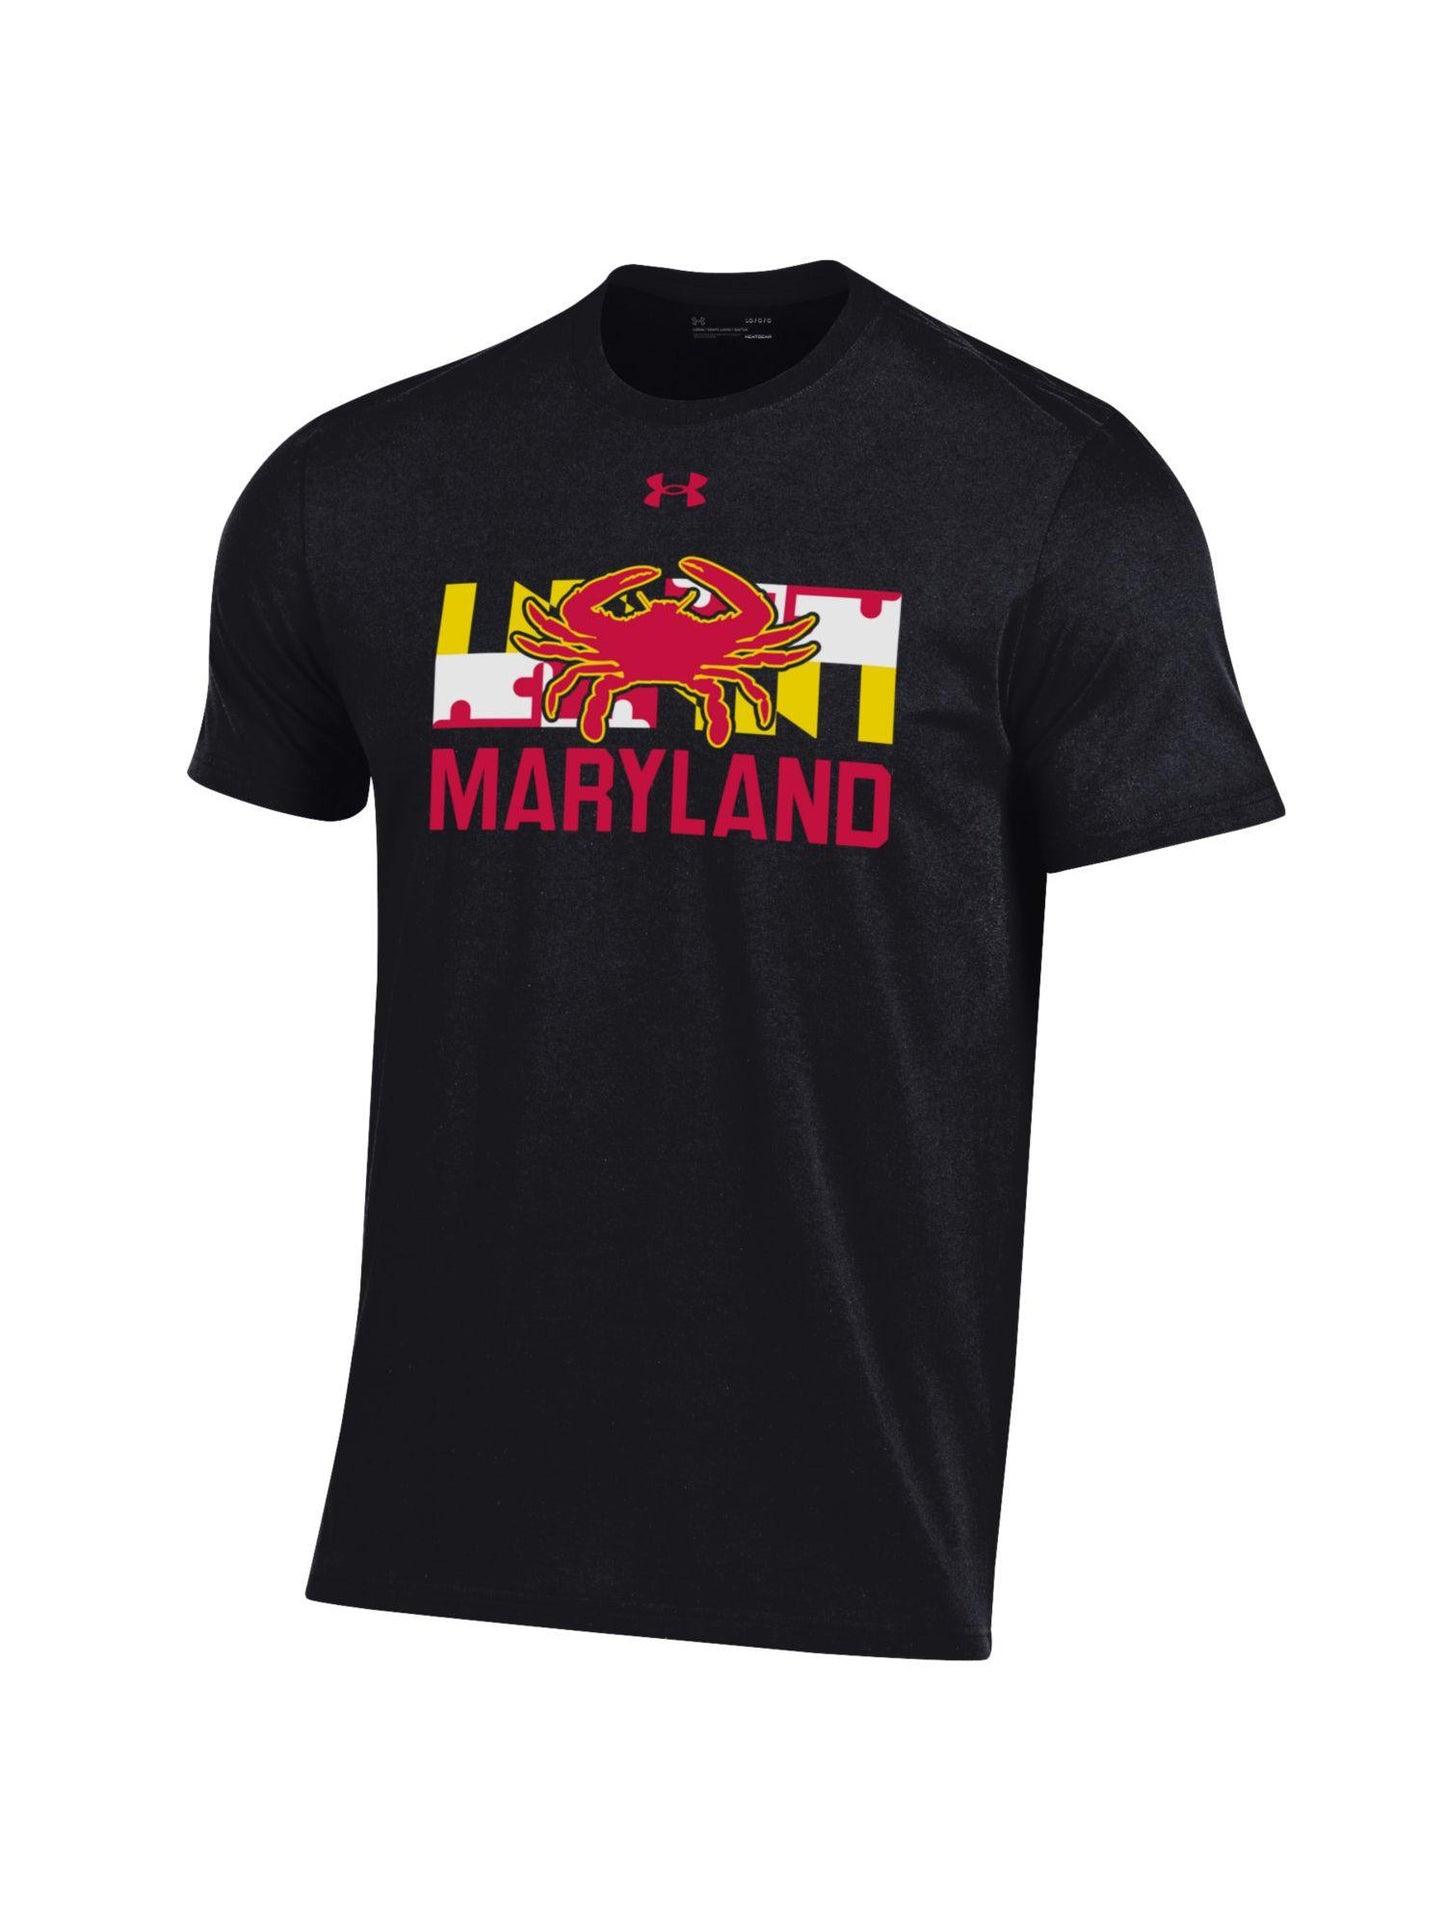 Under Armour Maryland Crab T-Shirt (Black)